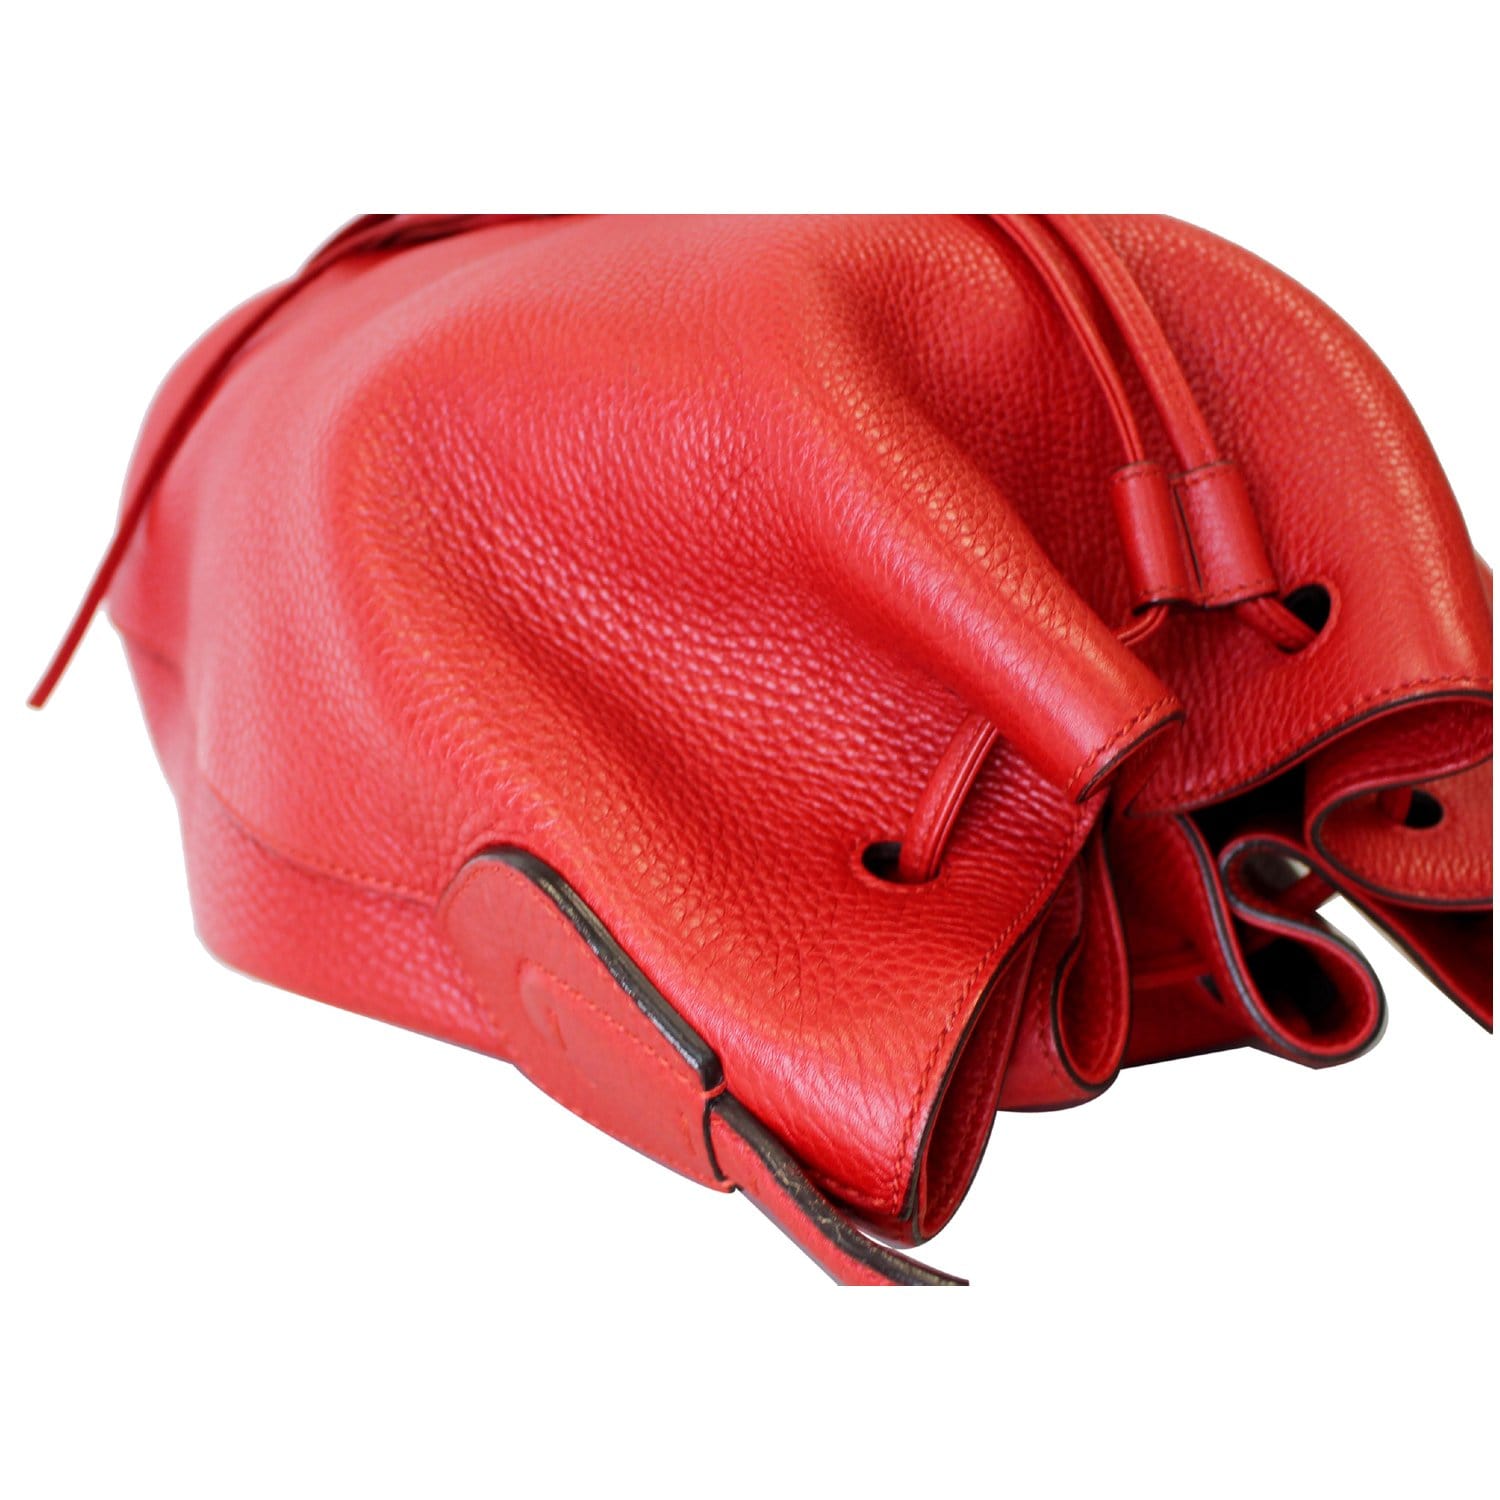 Deer Head Sequins Tassels Shoulder Bag In RED